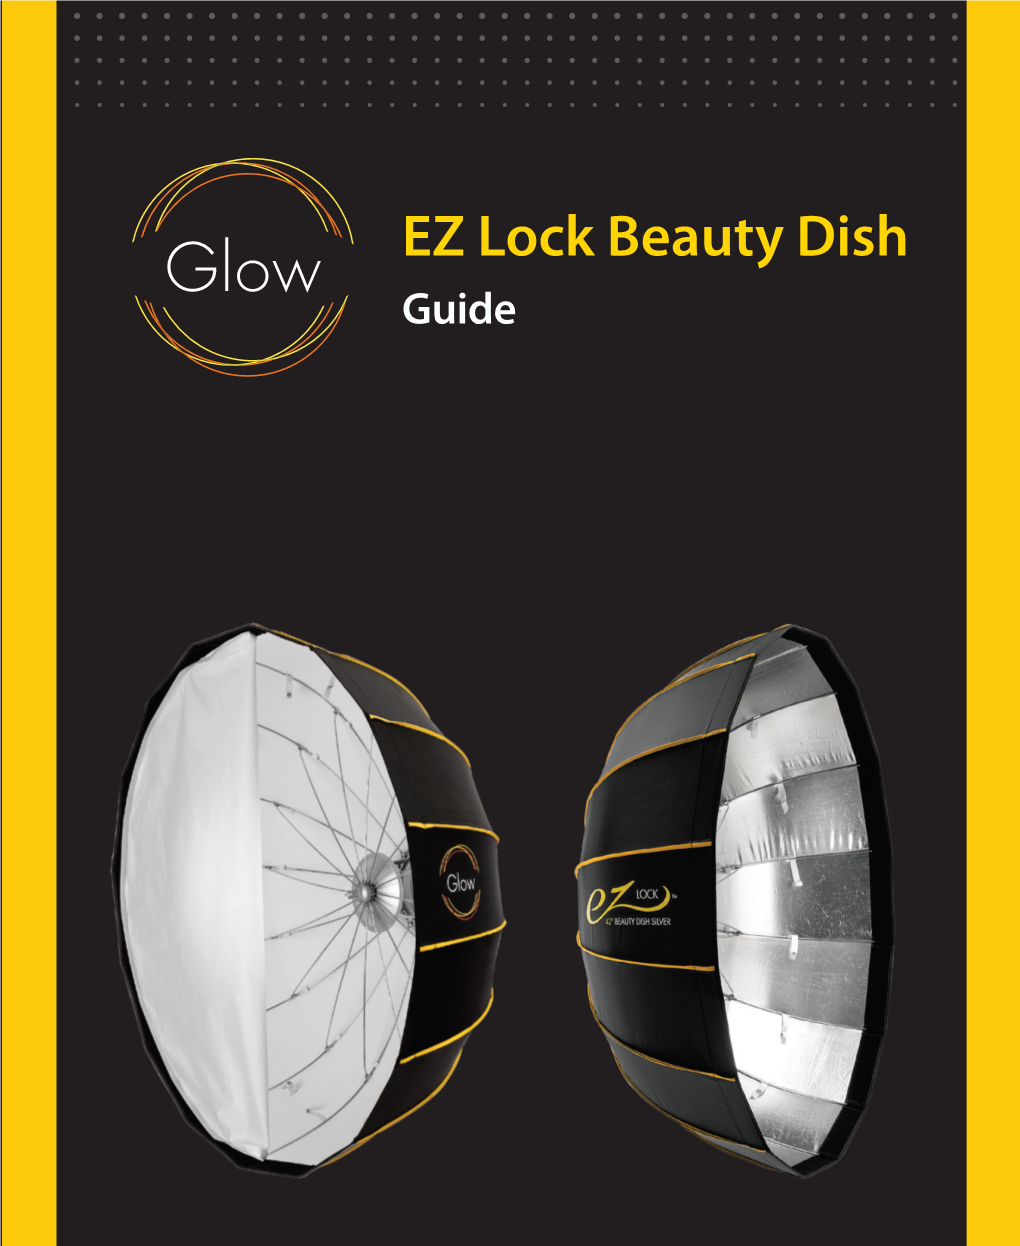 EZ Lock Beauty Dish Guide Introduction